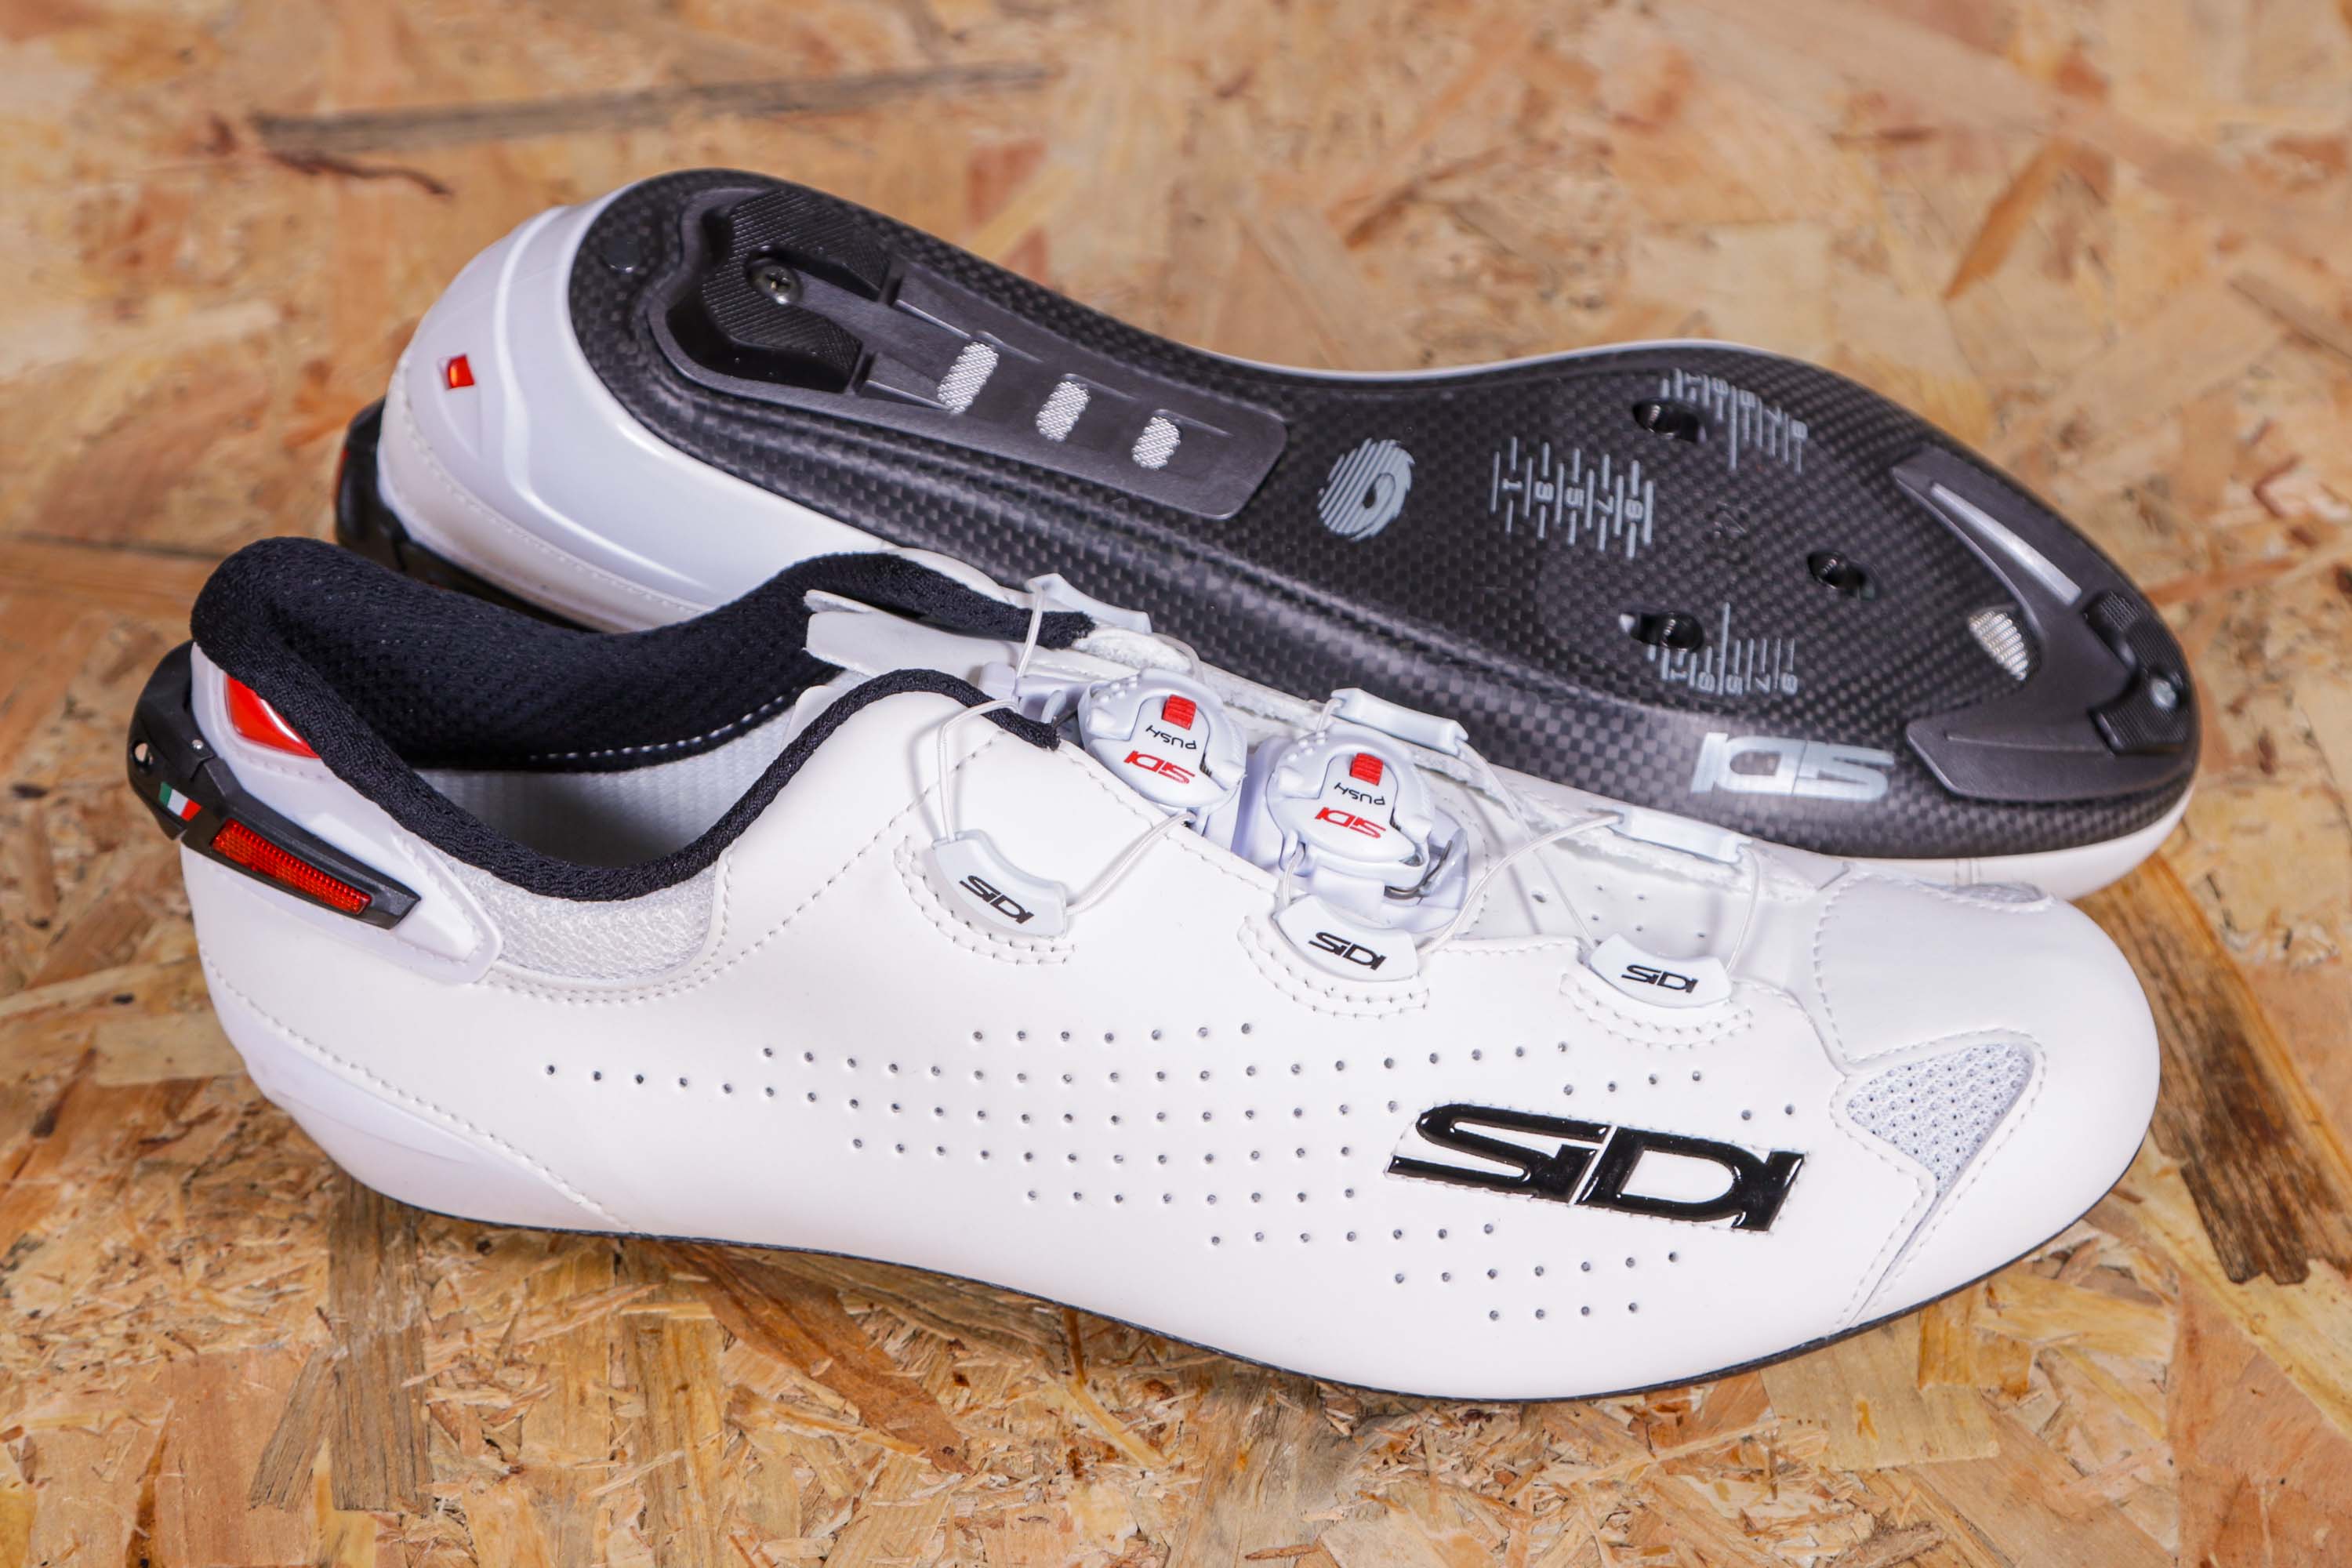 Review: Sidi Shot 2 Road Shoes | road.cc